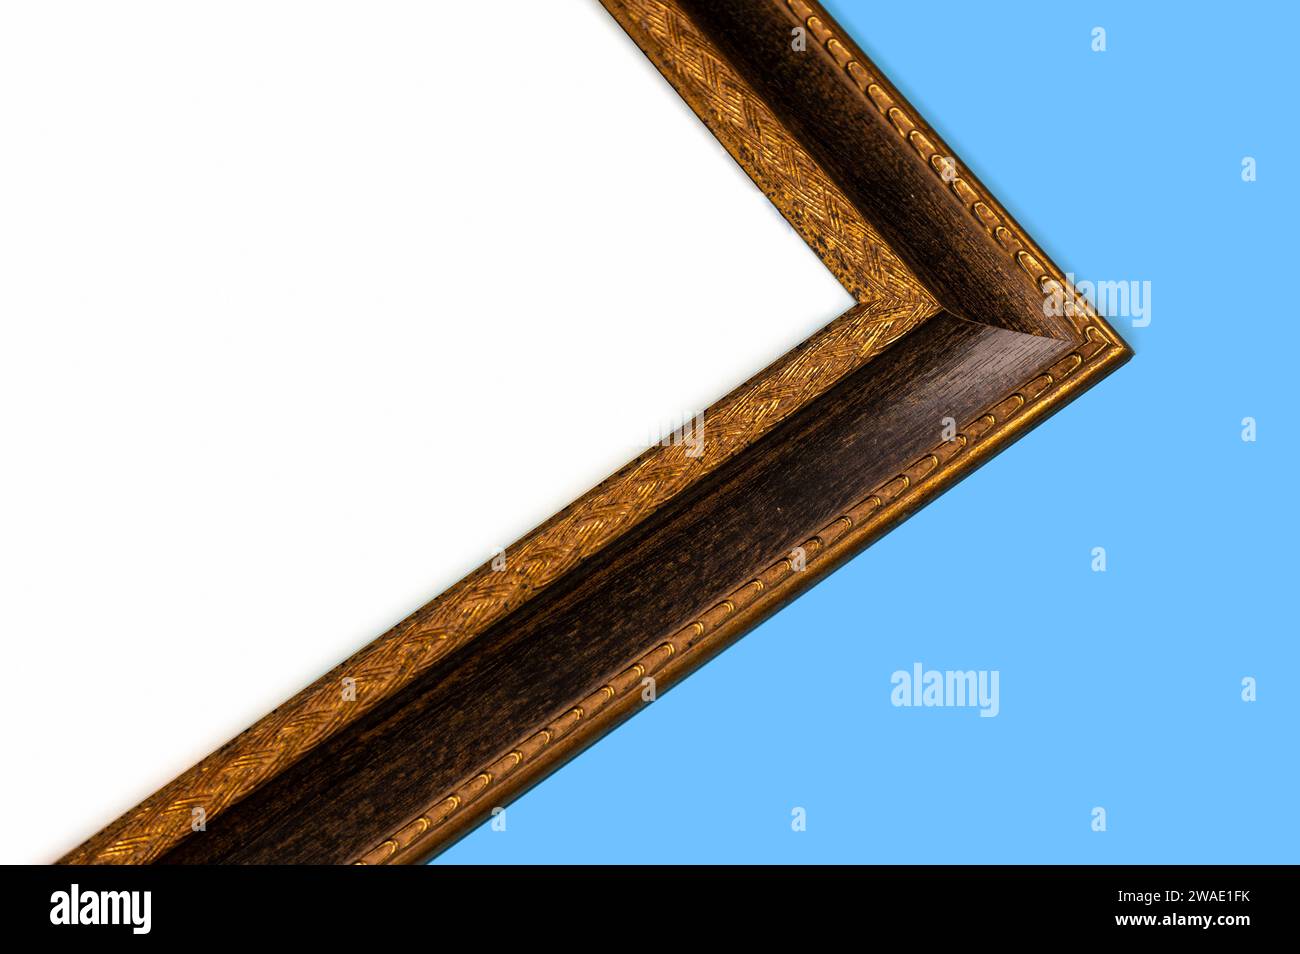 Marco de madera antiguo. Antiguo marco de madera rústica. Antiguo marco dorado tallado Foto de stock